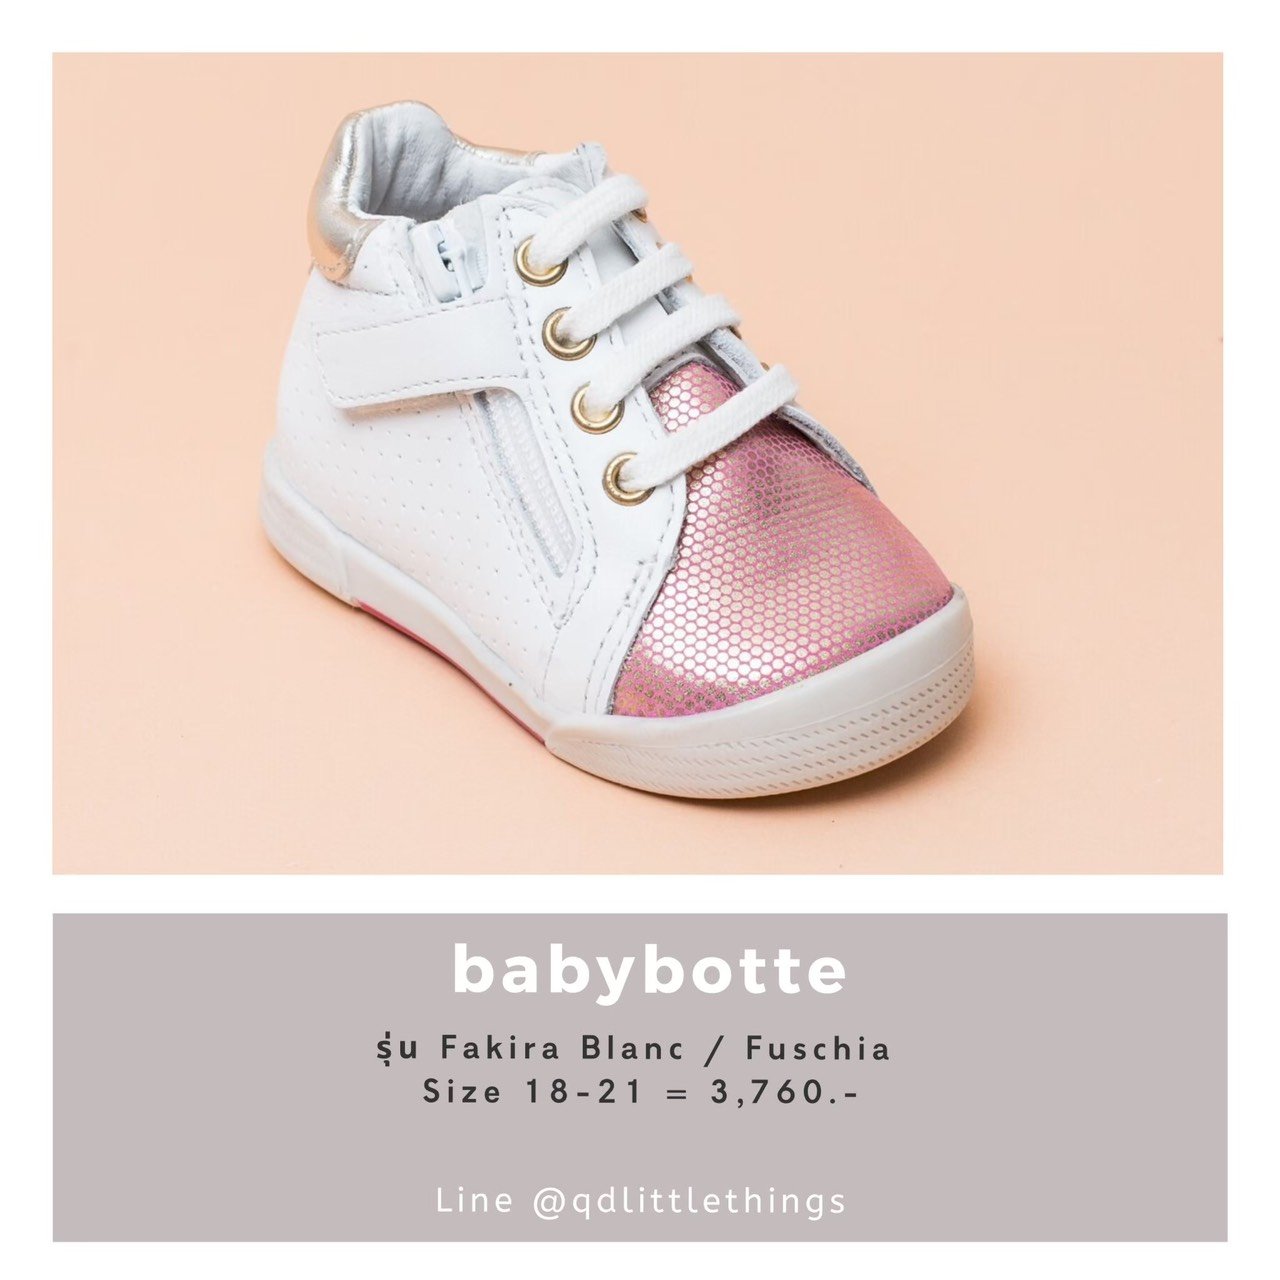 BabyBotte : Fakira Blanc / Fuschia